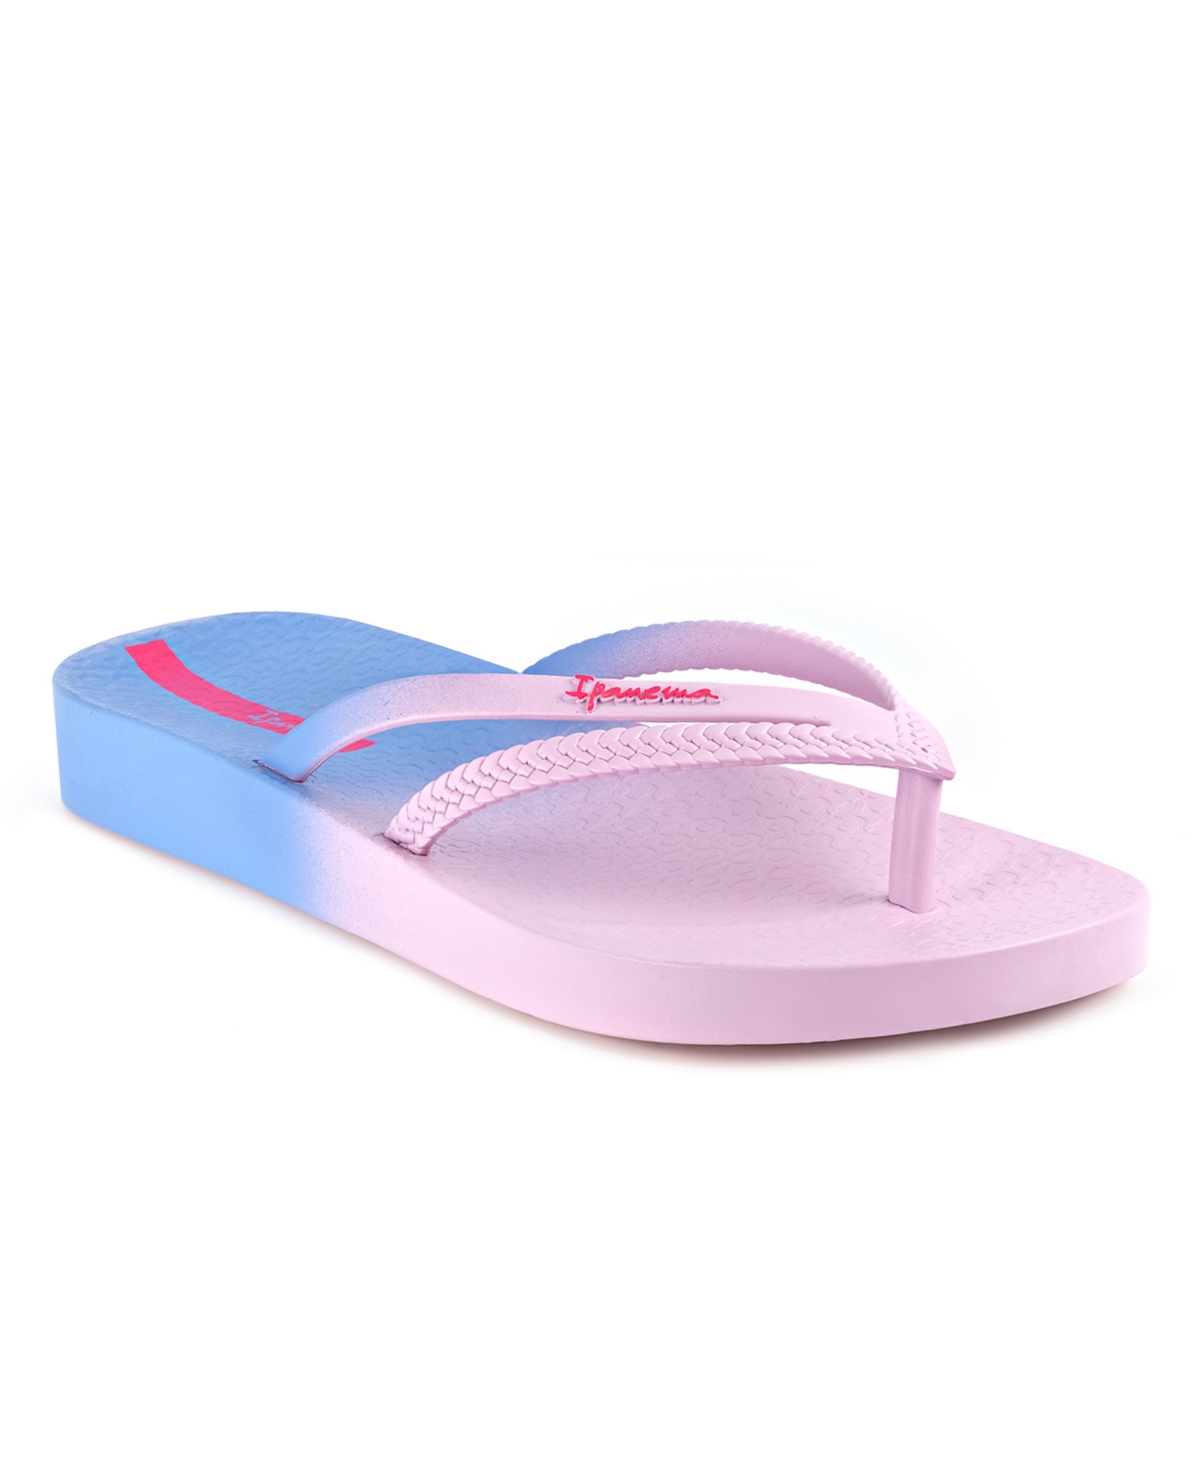 Ipanema Women's Bossa Soft Chic Flip-flop Sandals Women's Shoes In Pink/blue